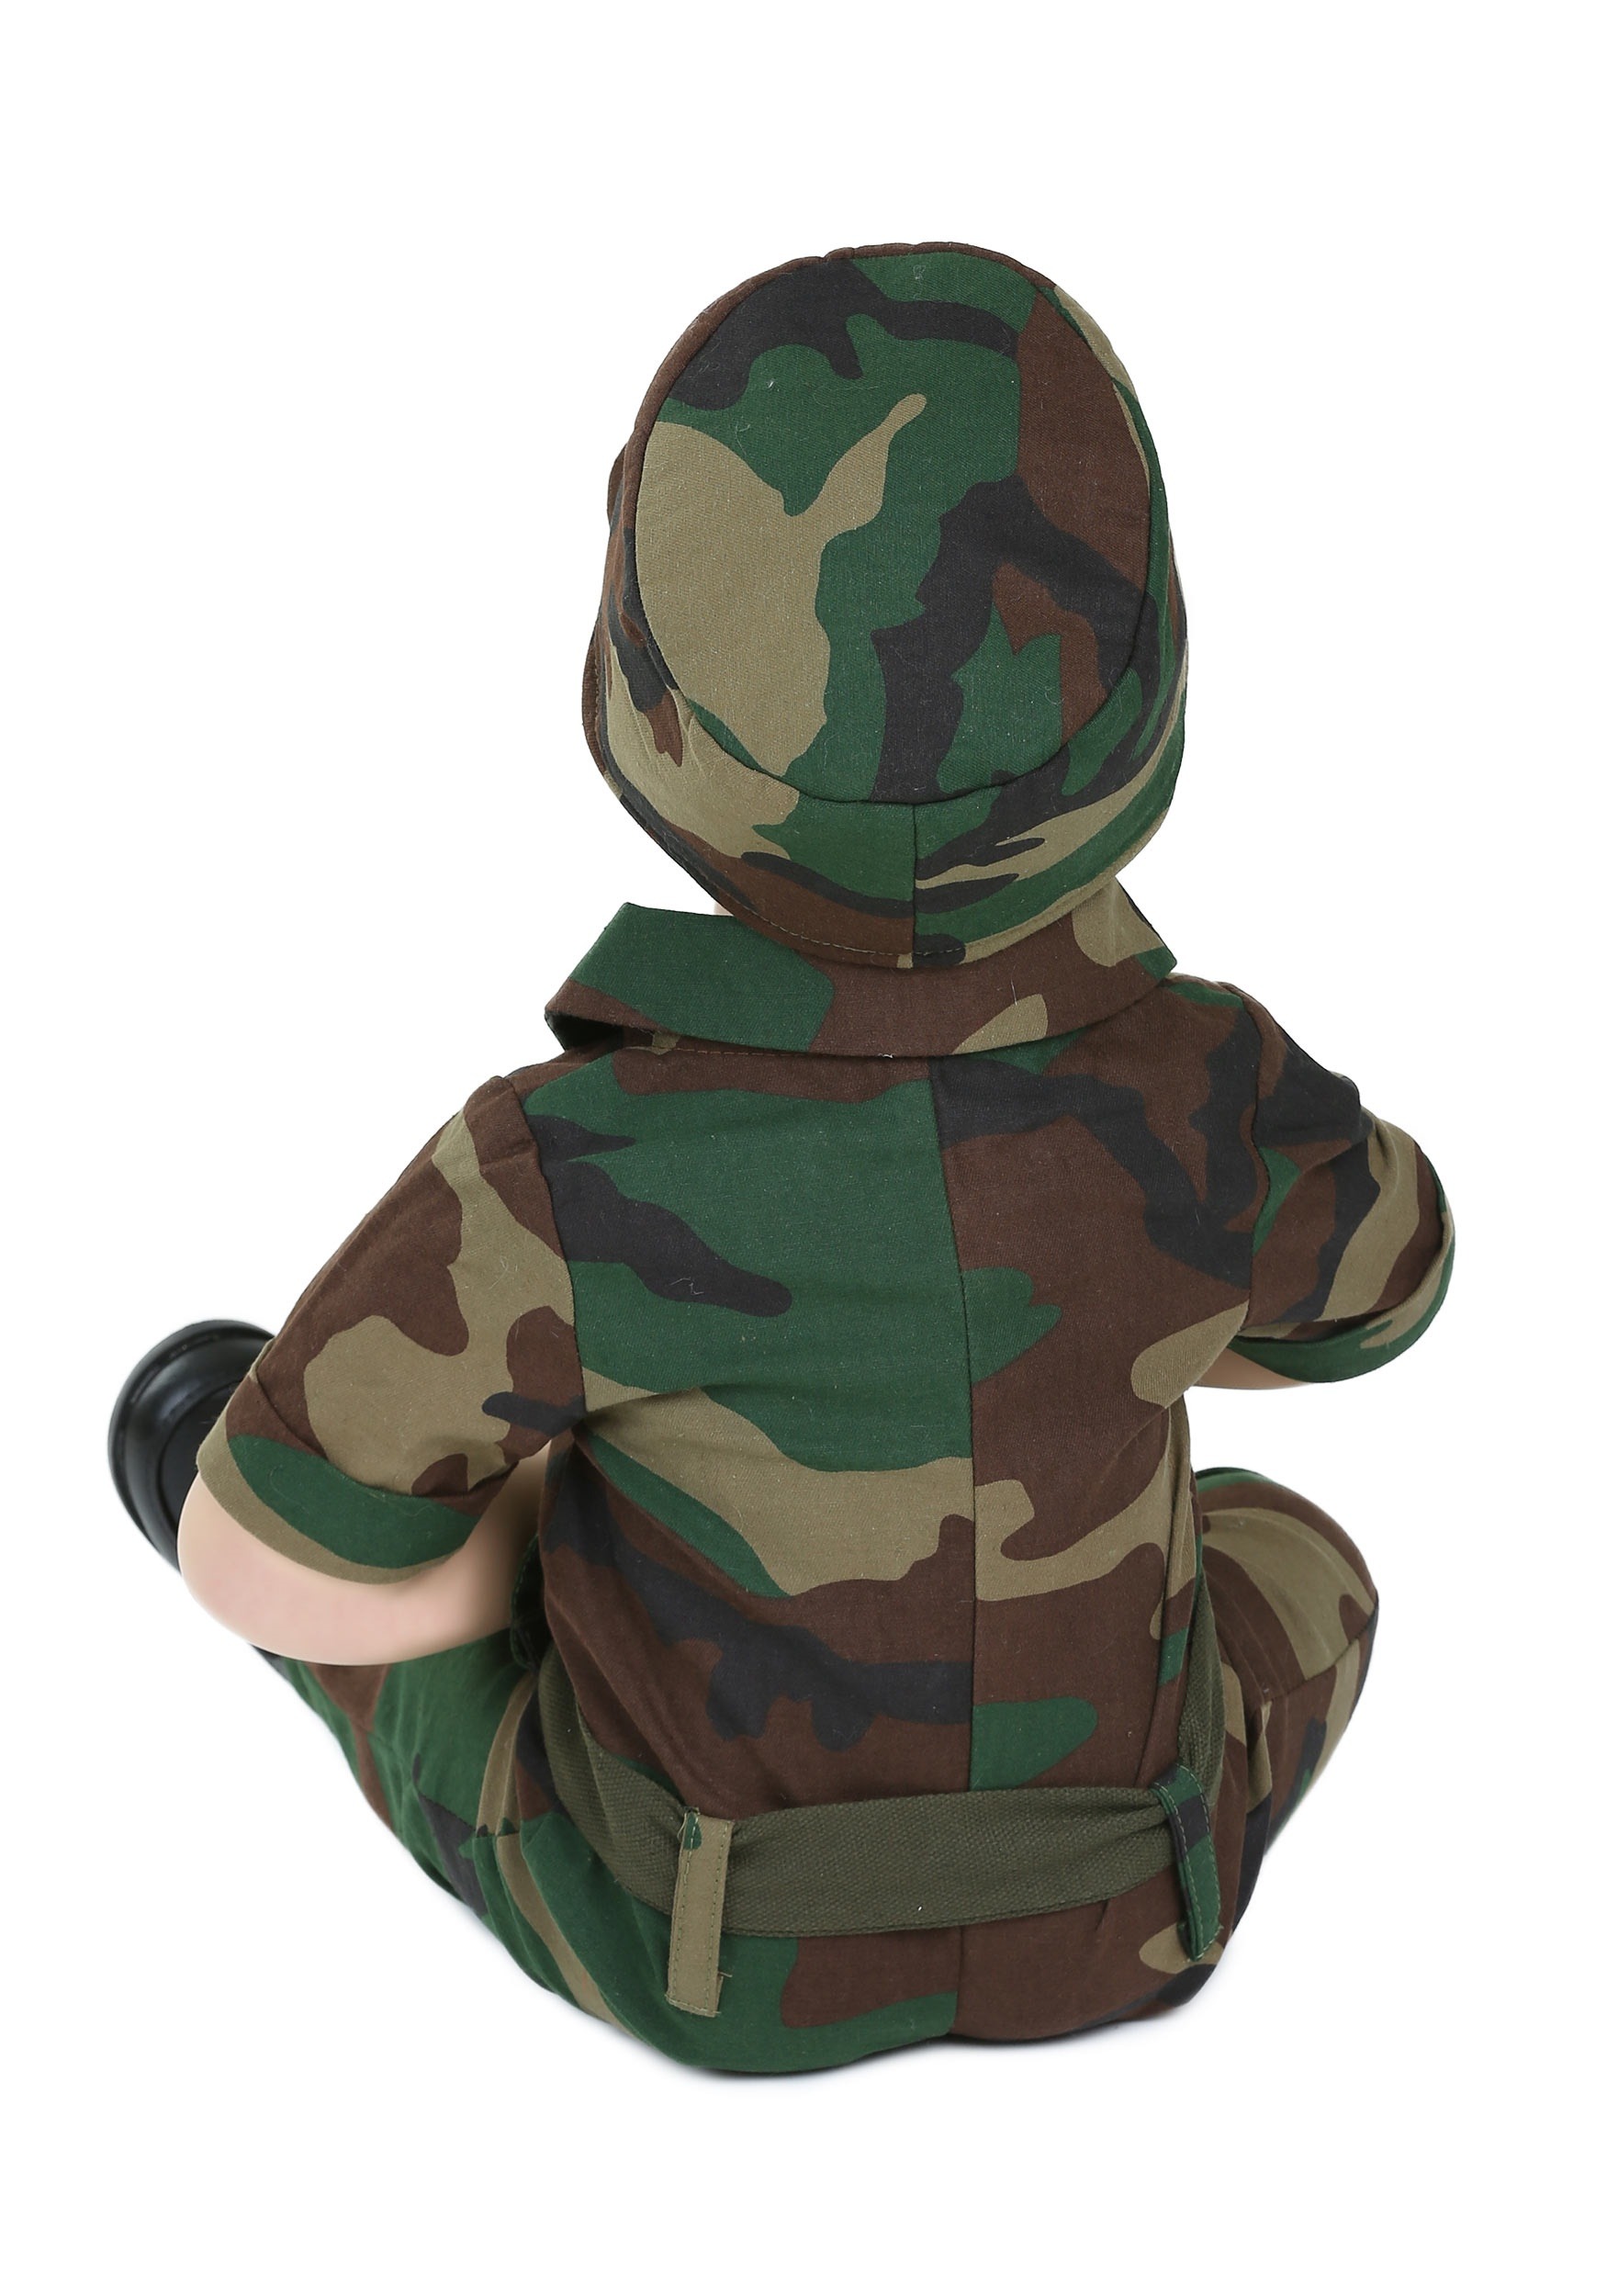 Infantry Soldier Infant Costume